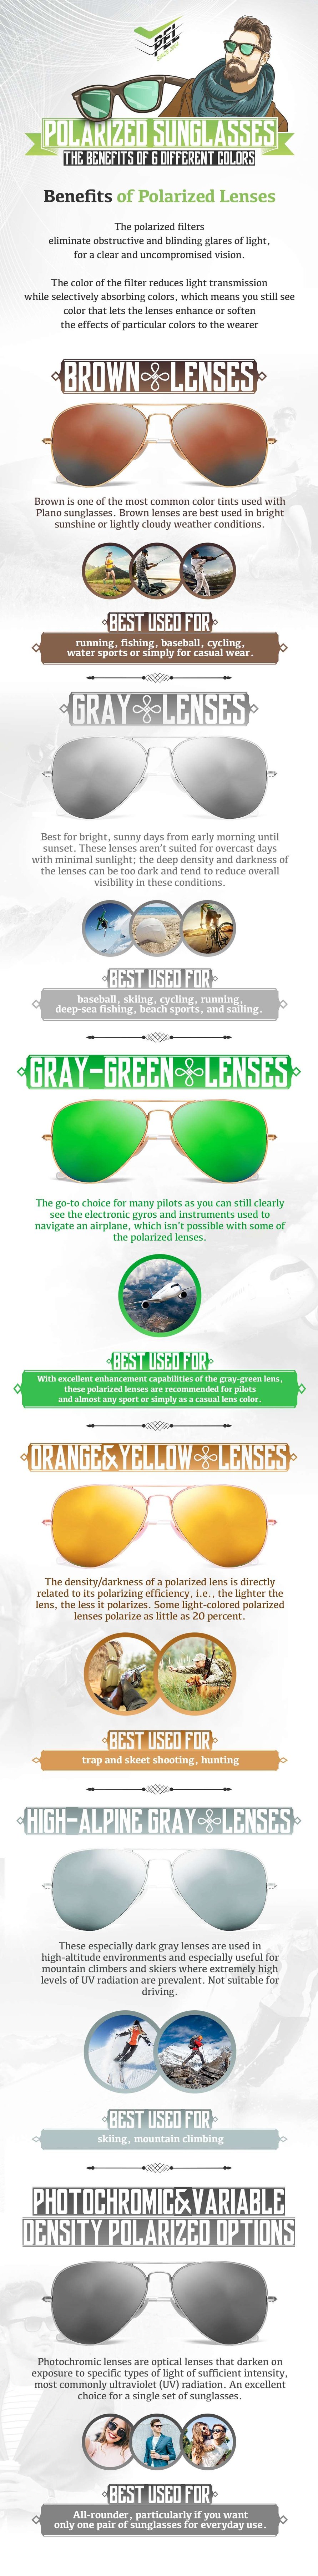 benefits of polarized sunglasses.jpg